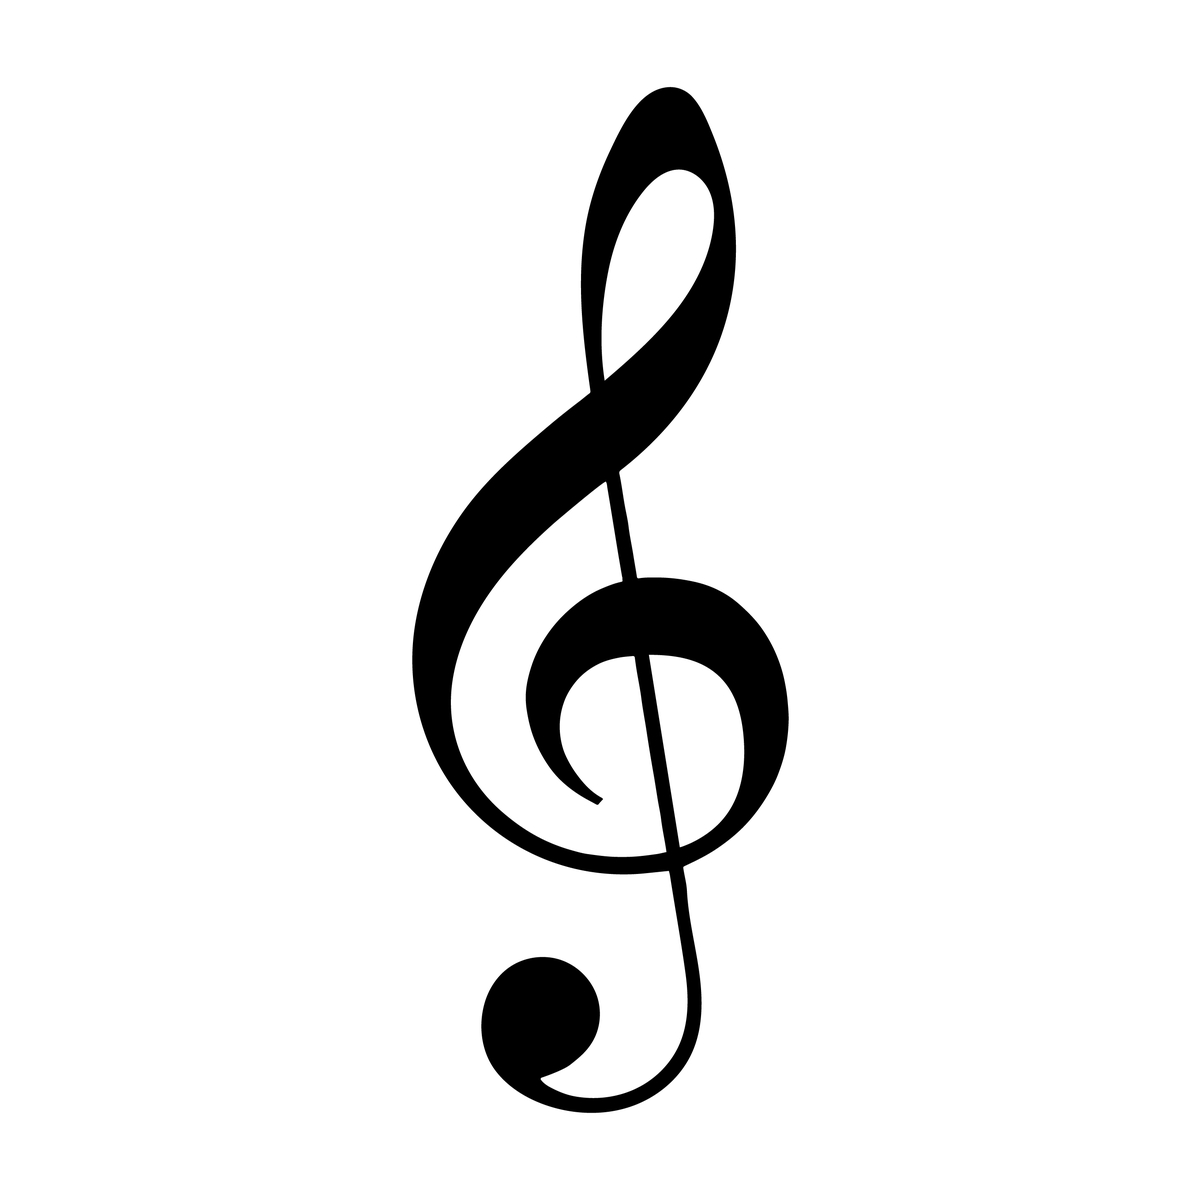 treble clef musical symbol